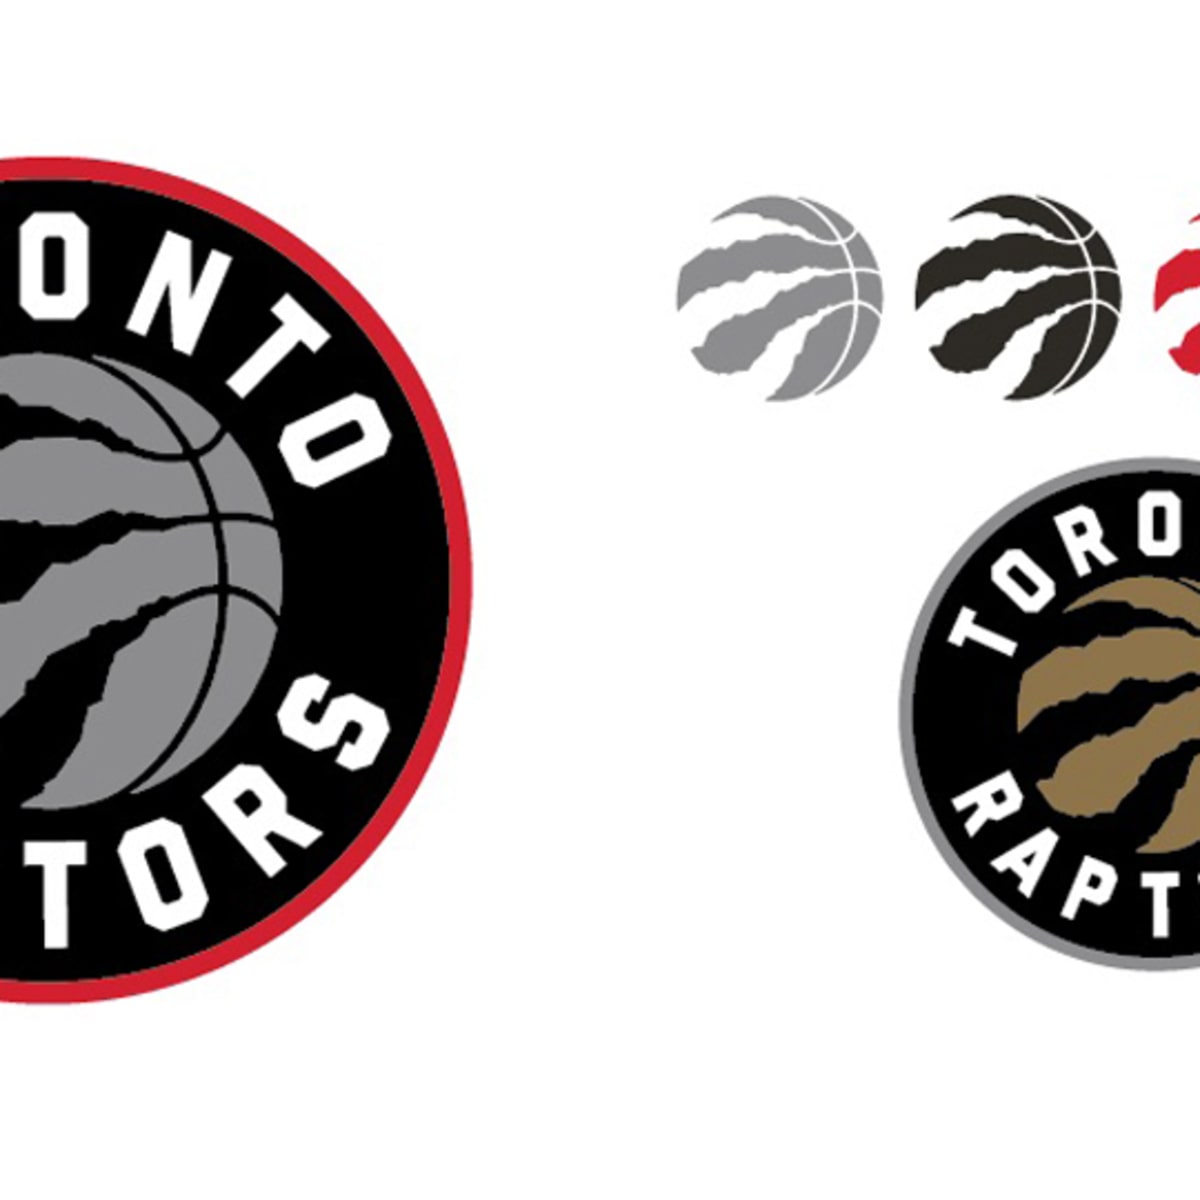 Drake's new Raptors clothing line honours old logo